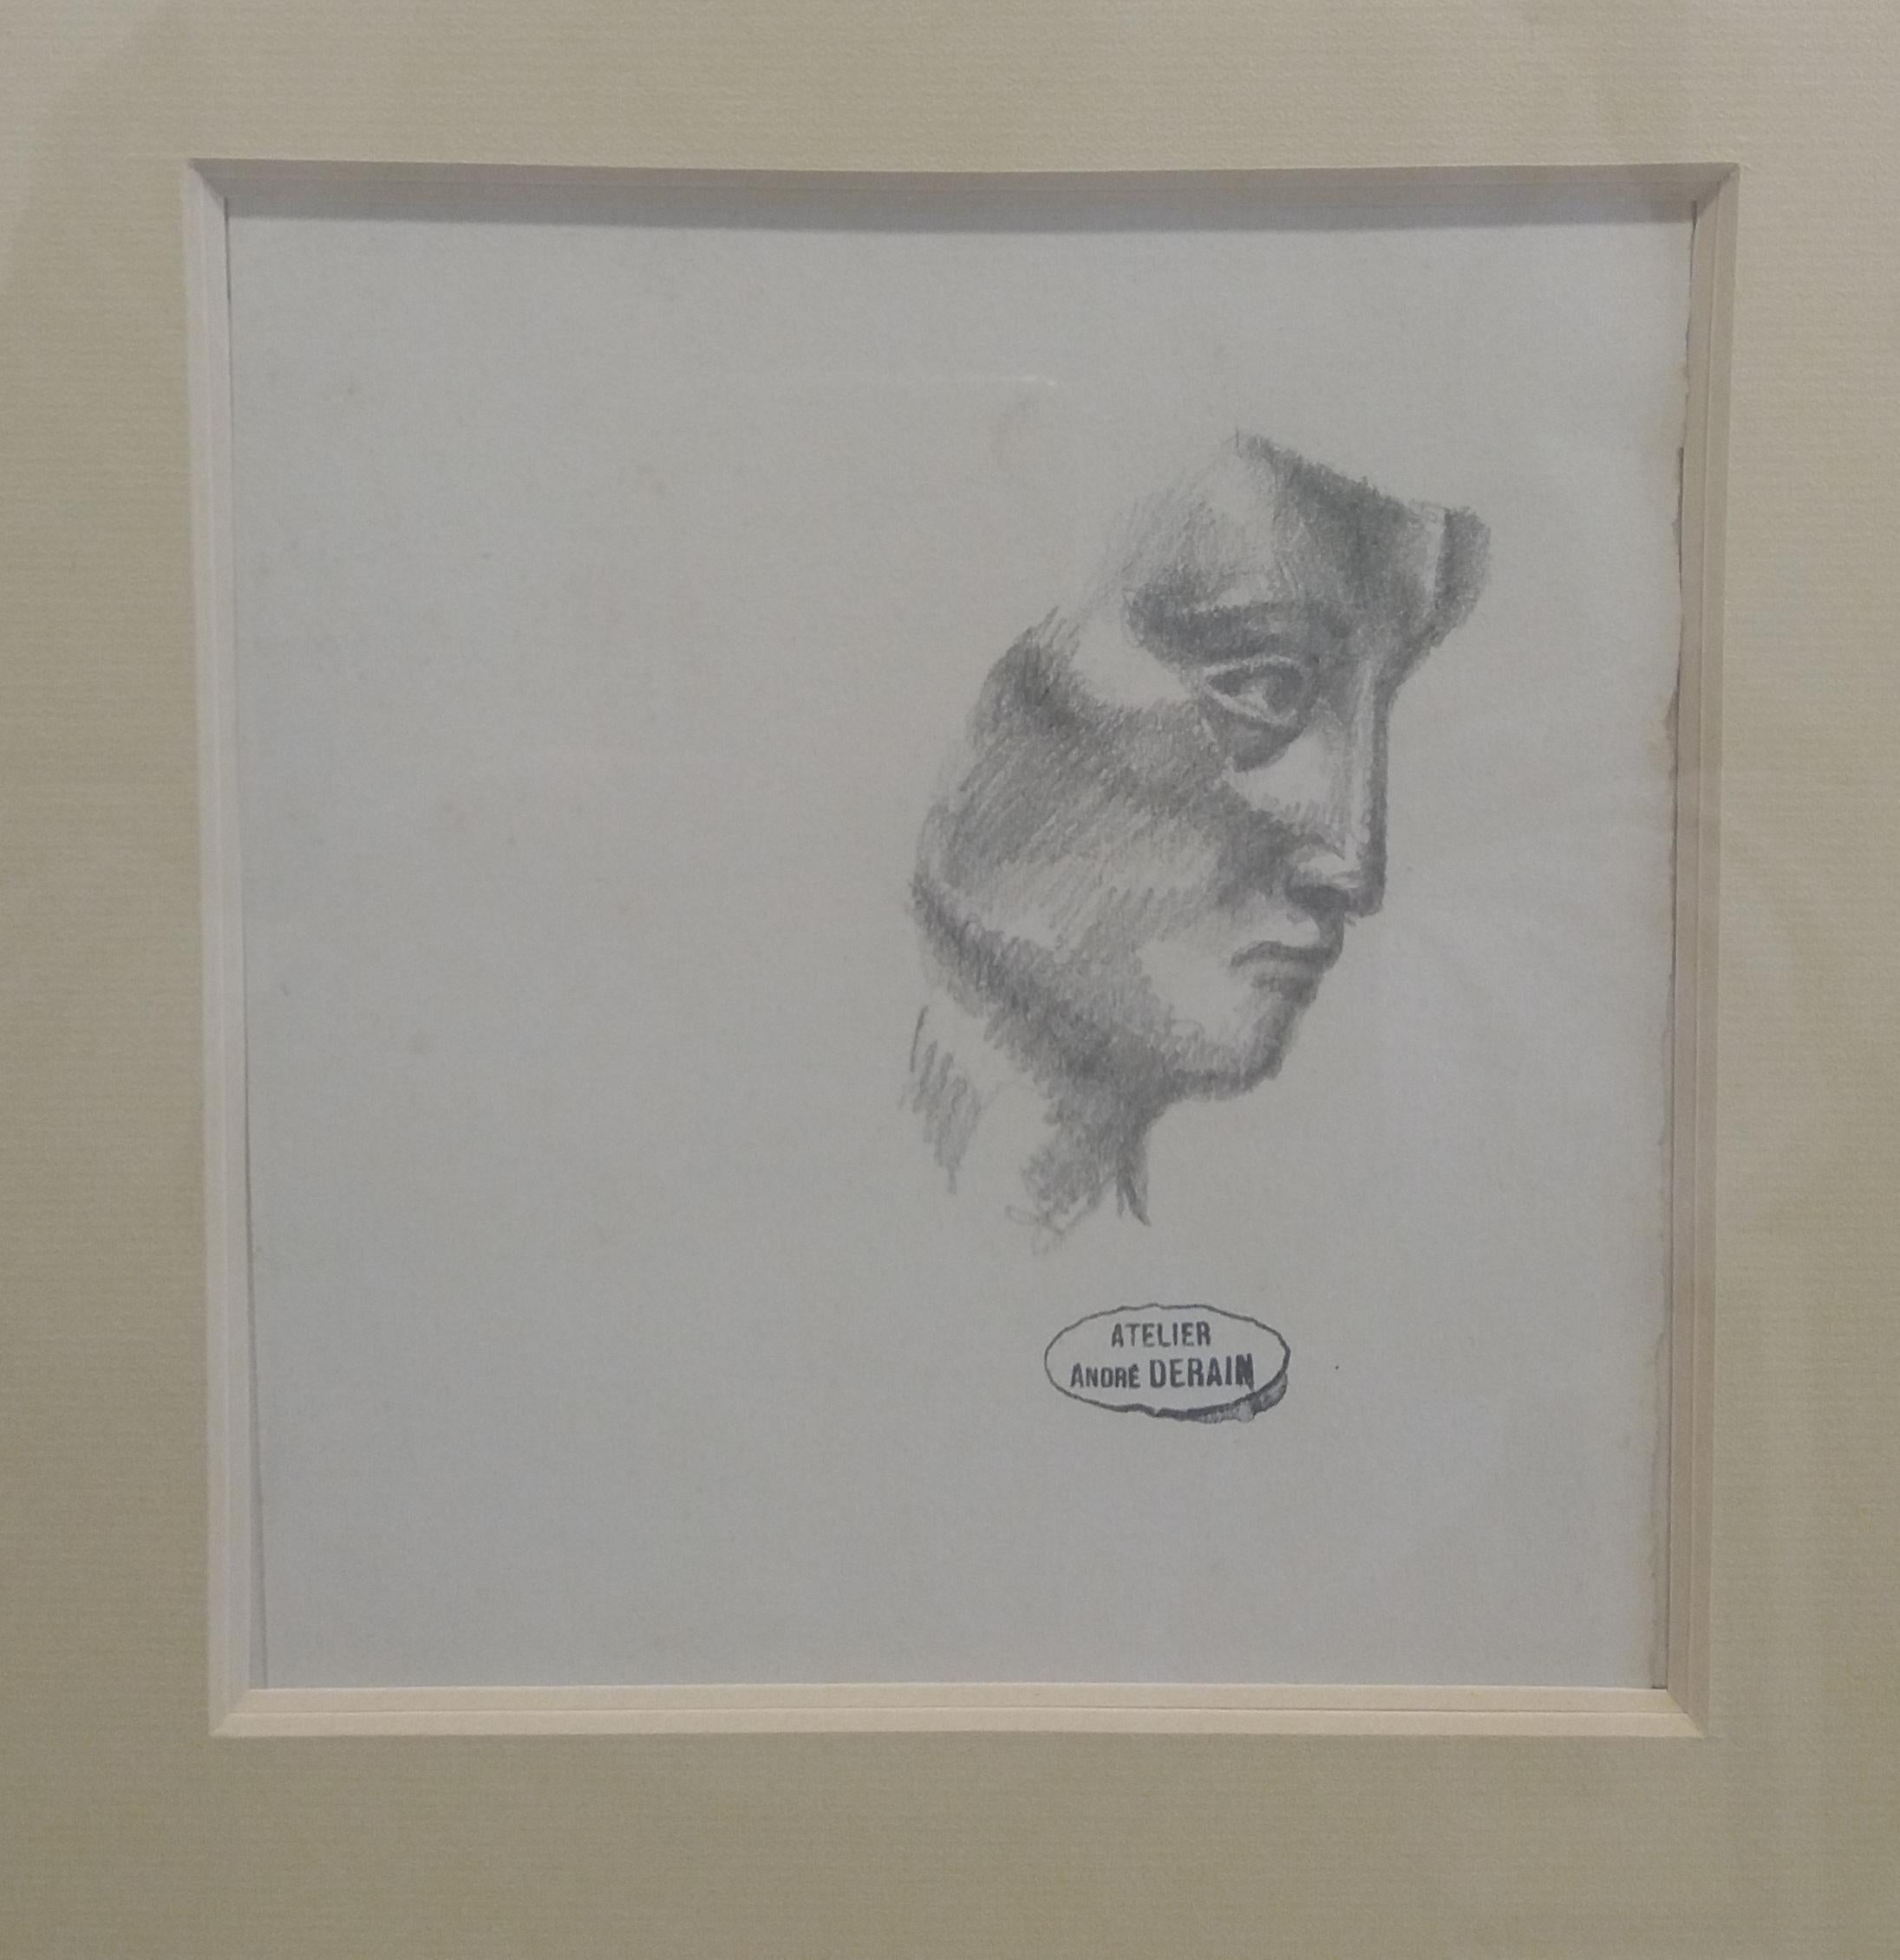  Derain   visage de profil. dessin original au crayon peinture - Painting de André Derain